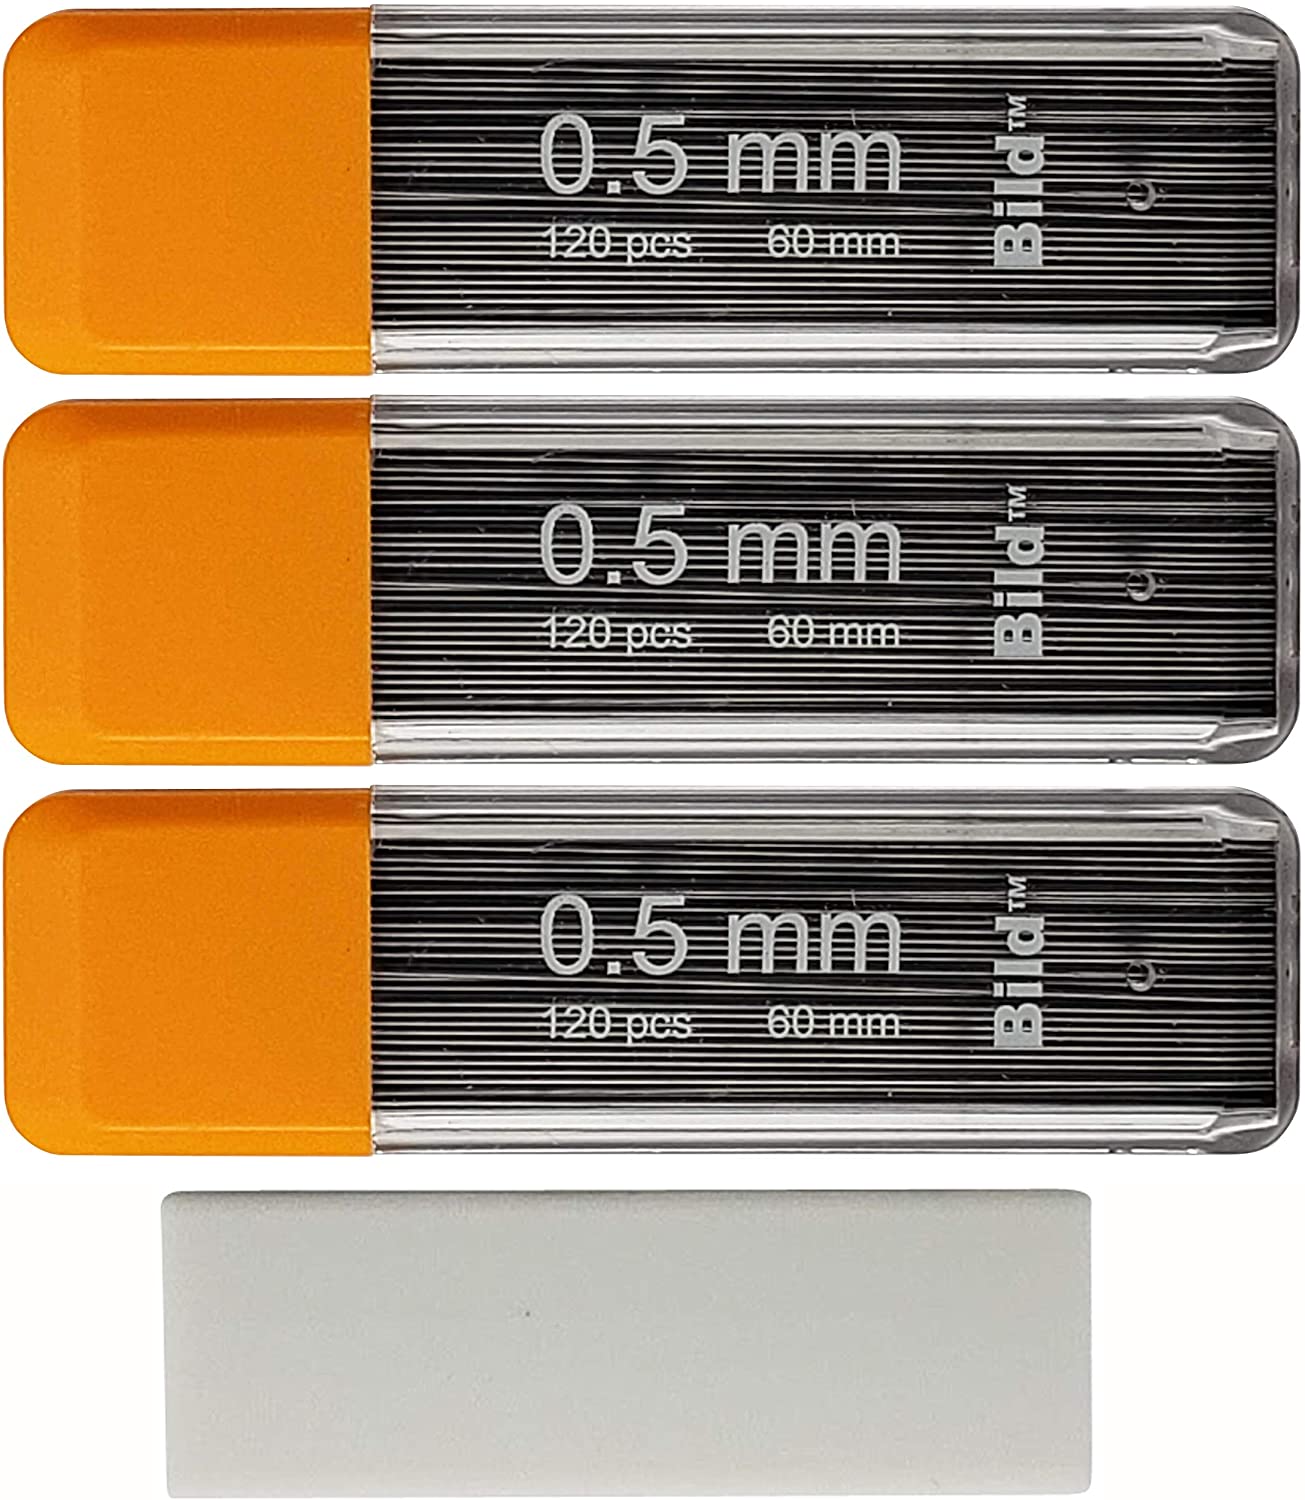 Bild Eraser & 2B 0.5mm Pencil Lead, 360-Piece